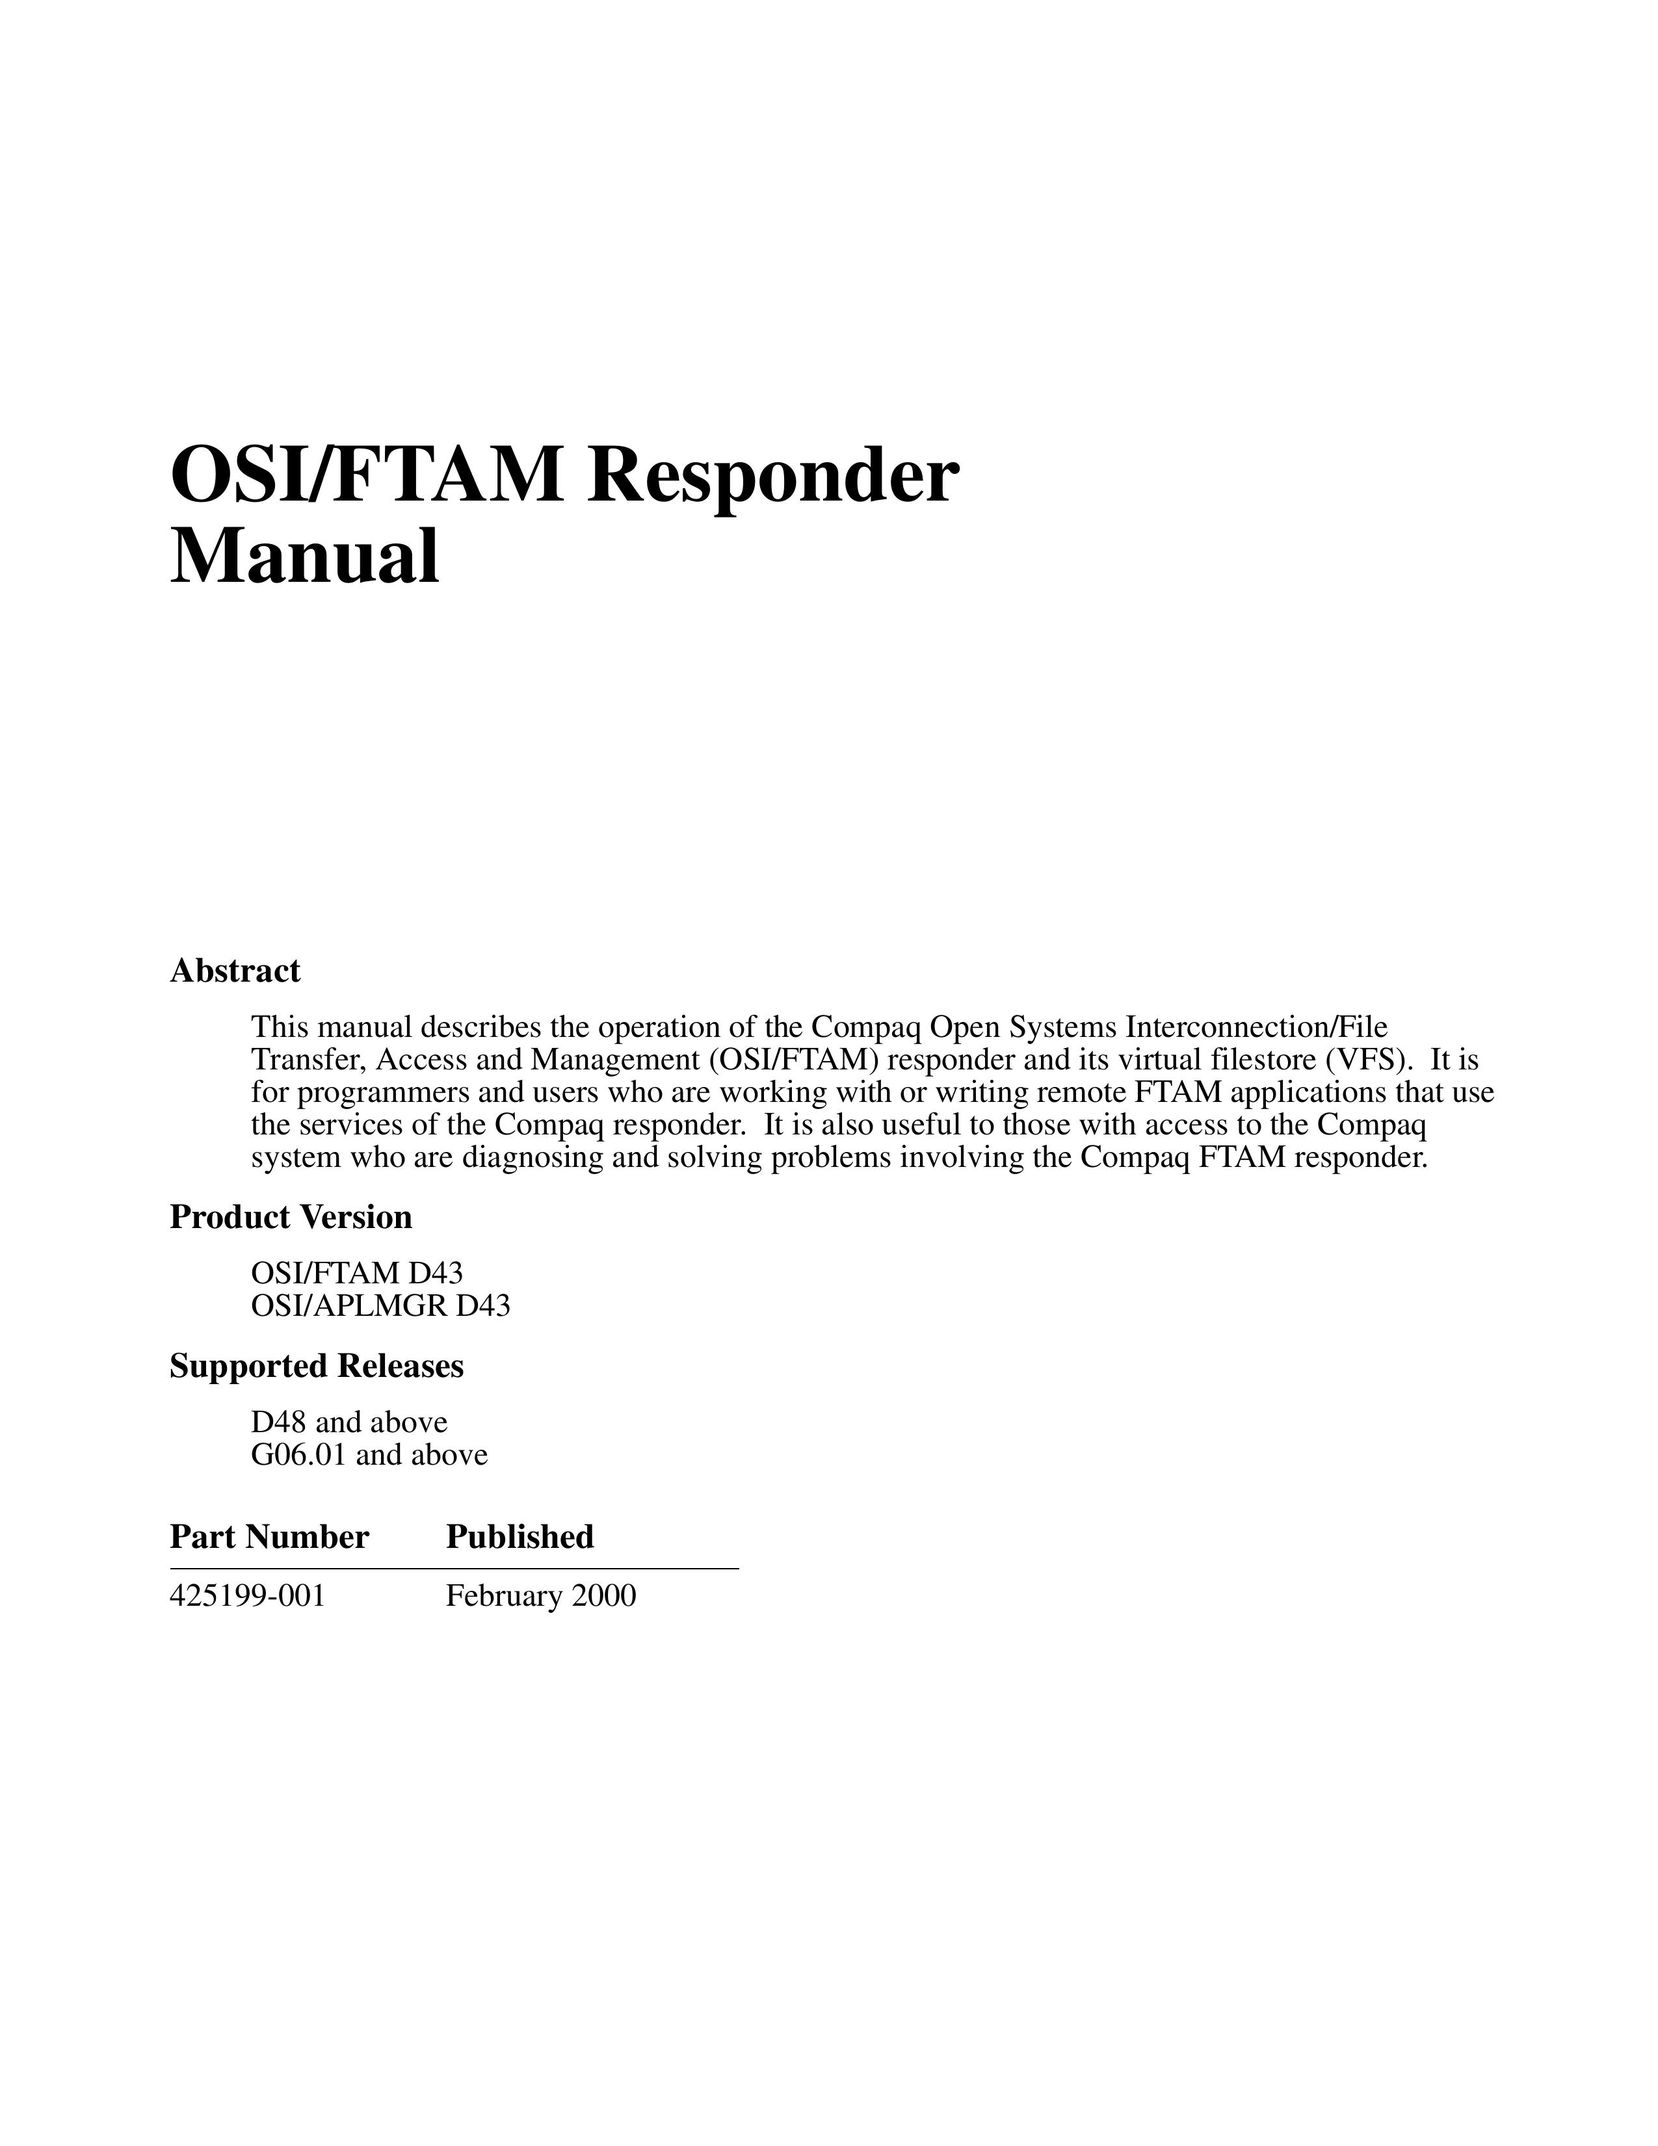 Compaq OSI/FTAM D43 Network Router User Manual